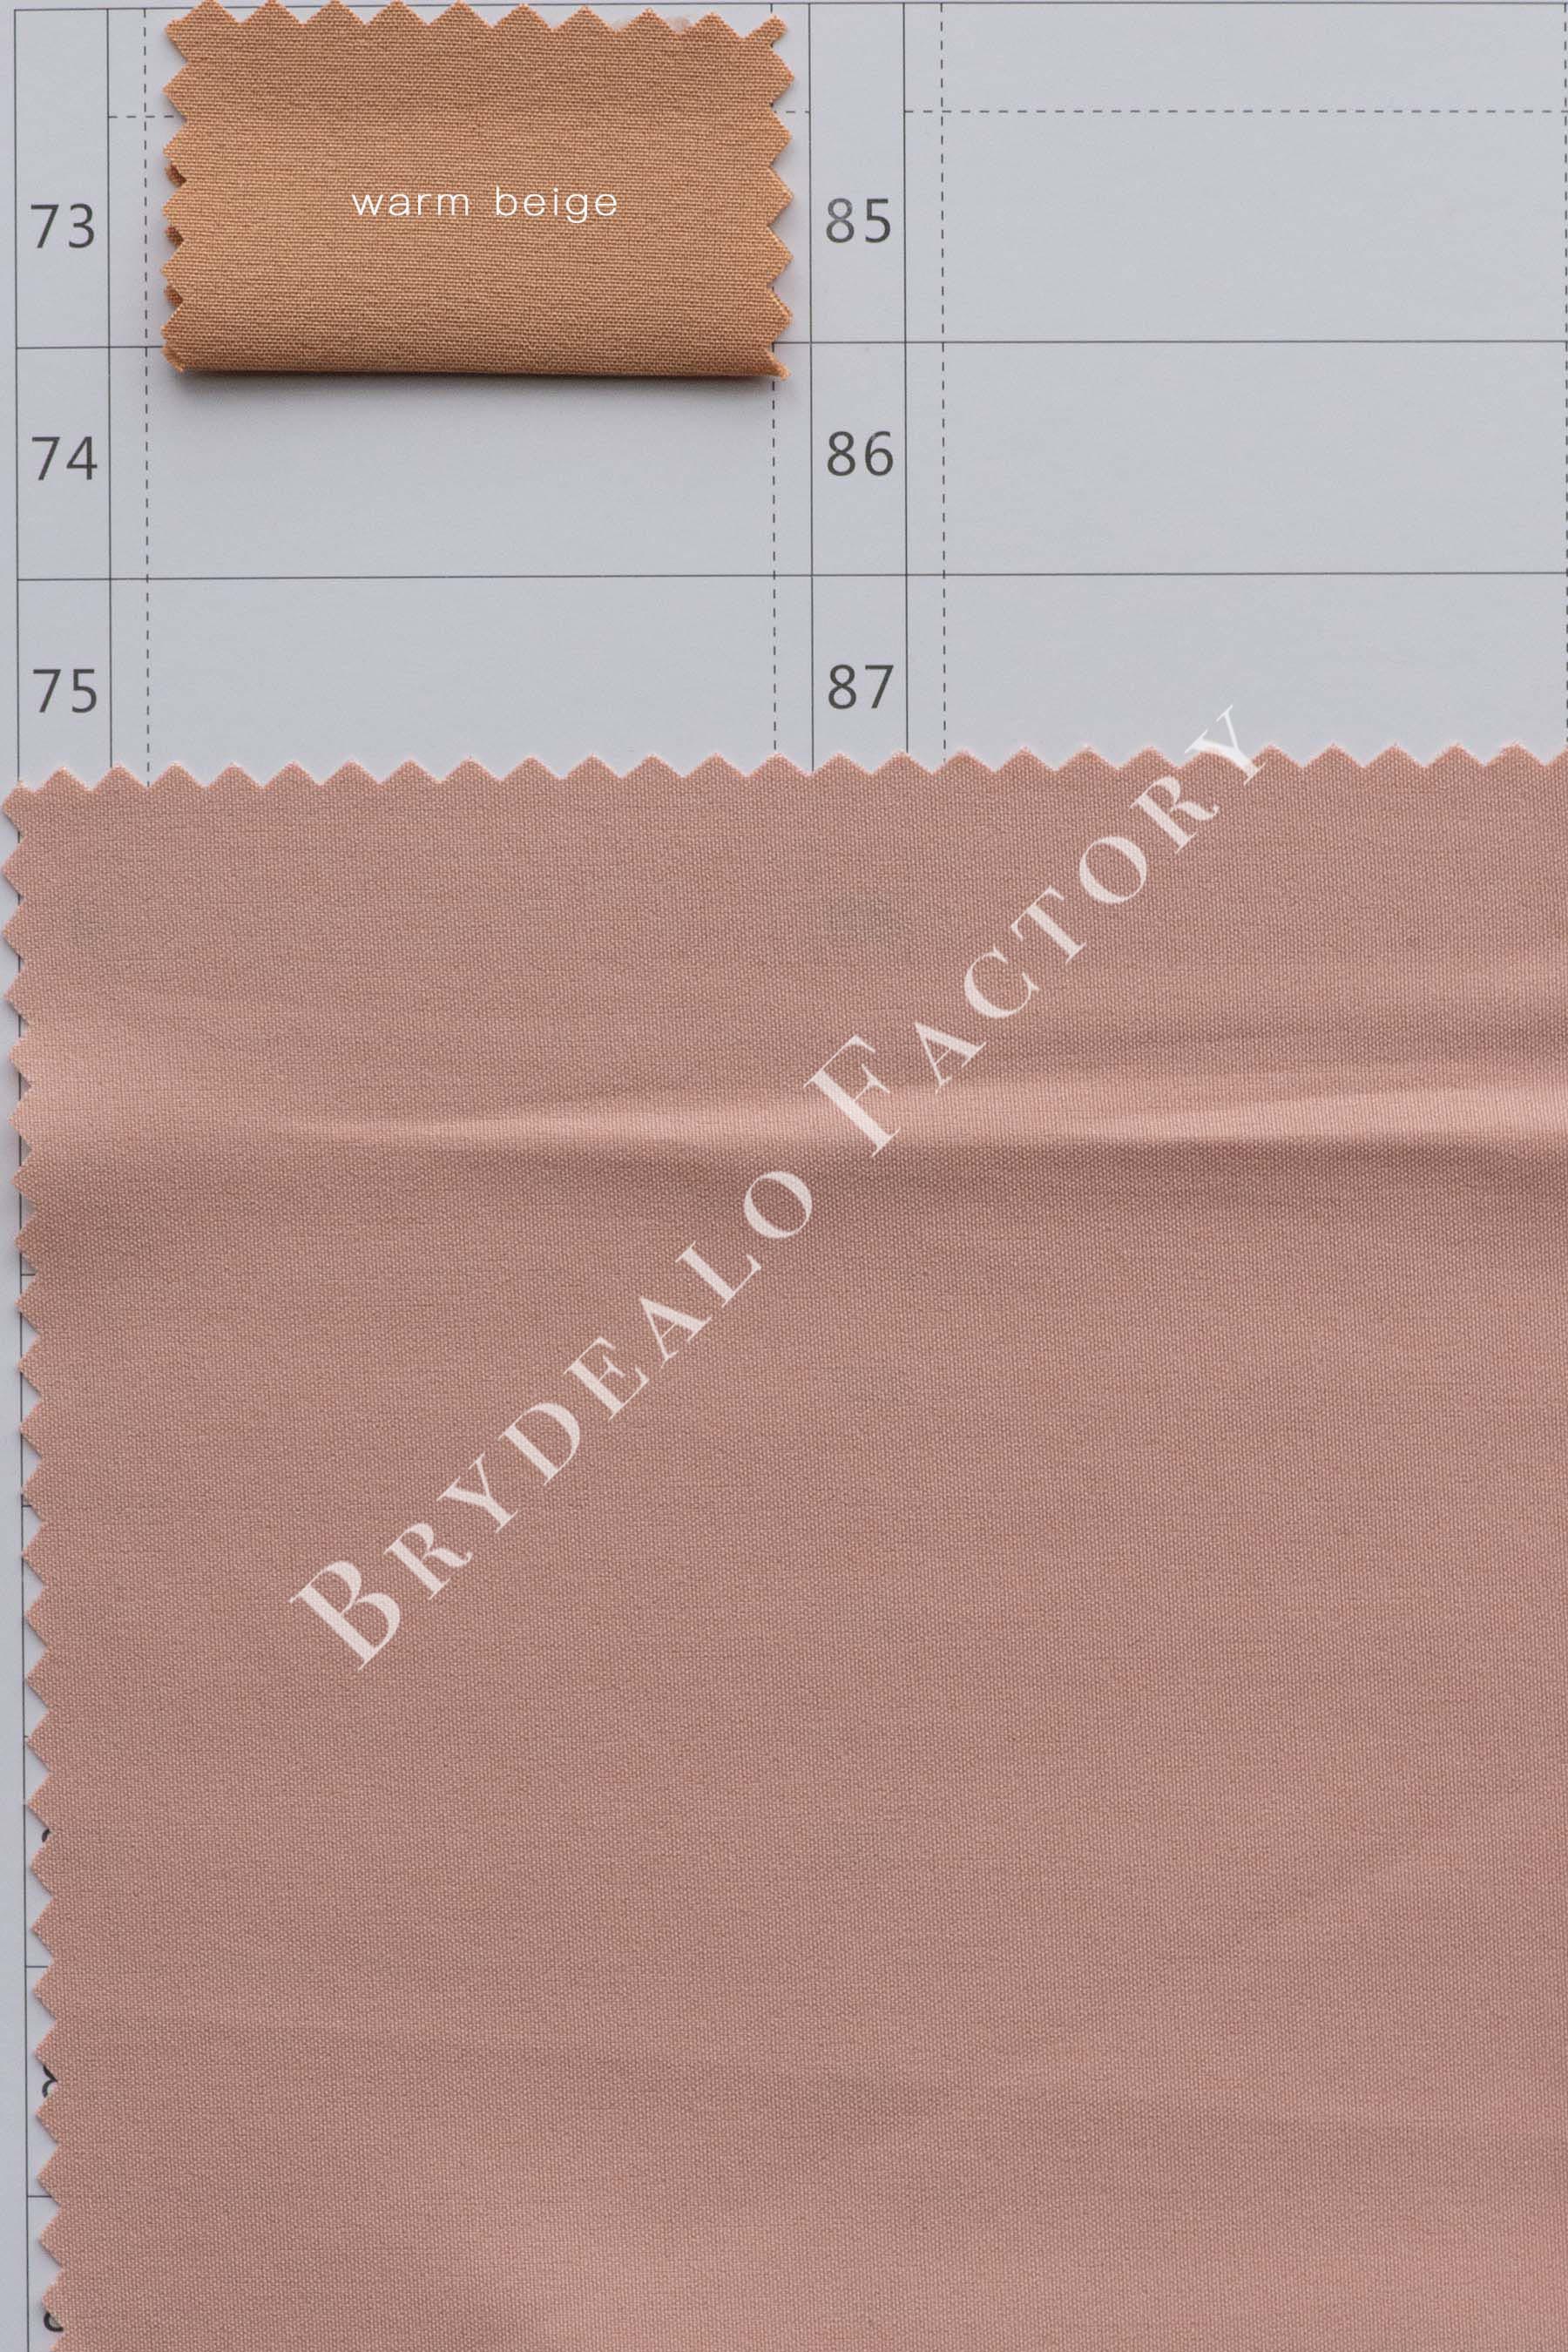 elastic lining fabric color chart-04